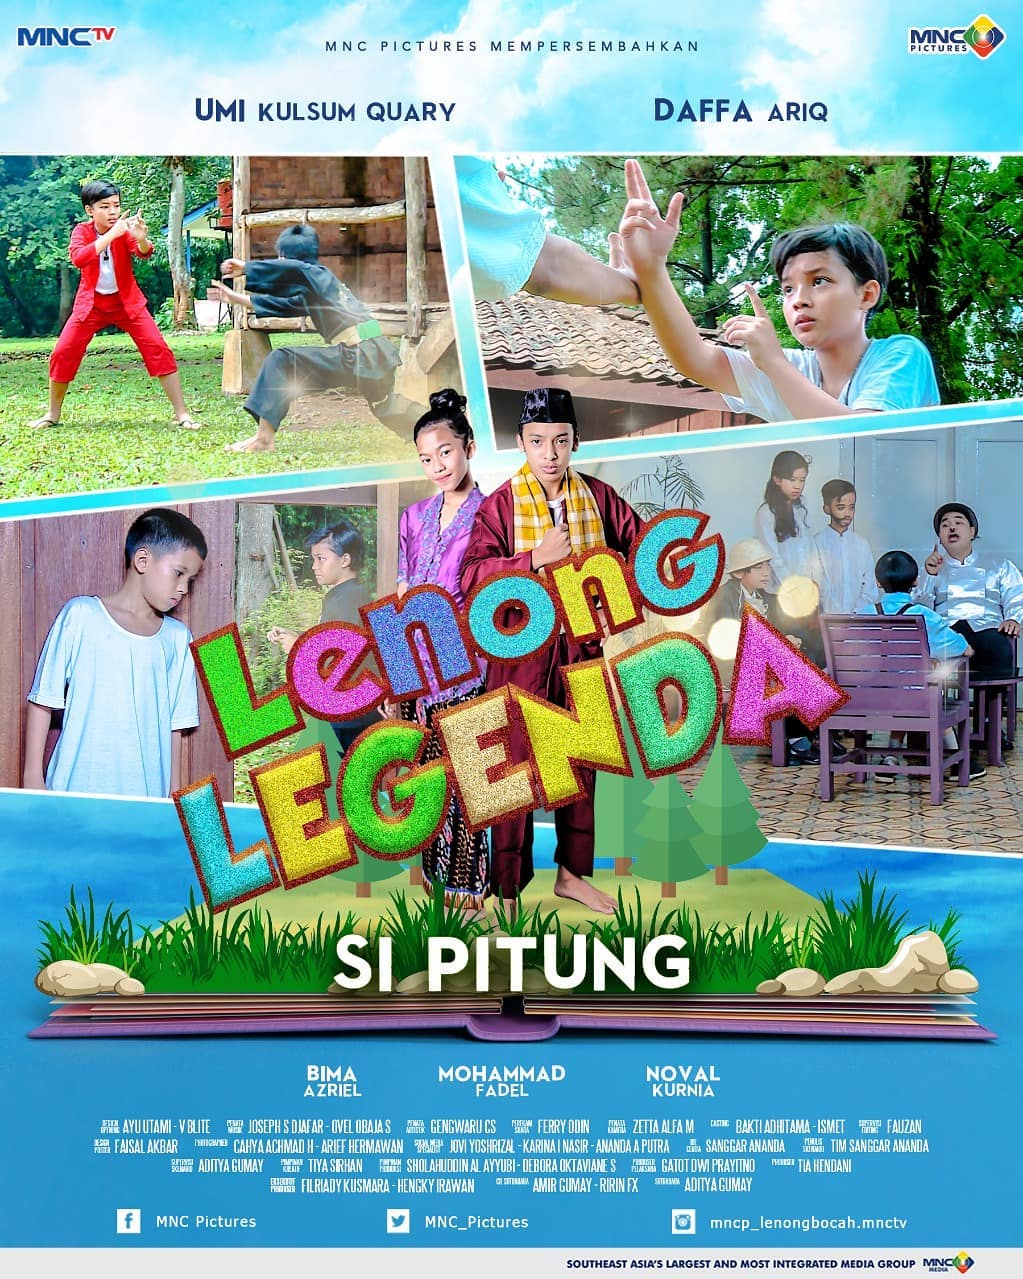 Sinopsis Lenong Legenda Episode 1 - Terakhir Lengkap (Drama Anak MNCTV)